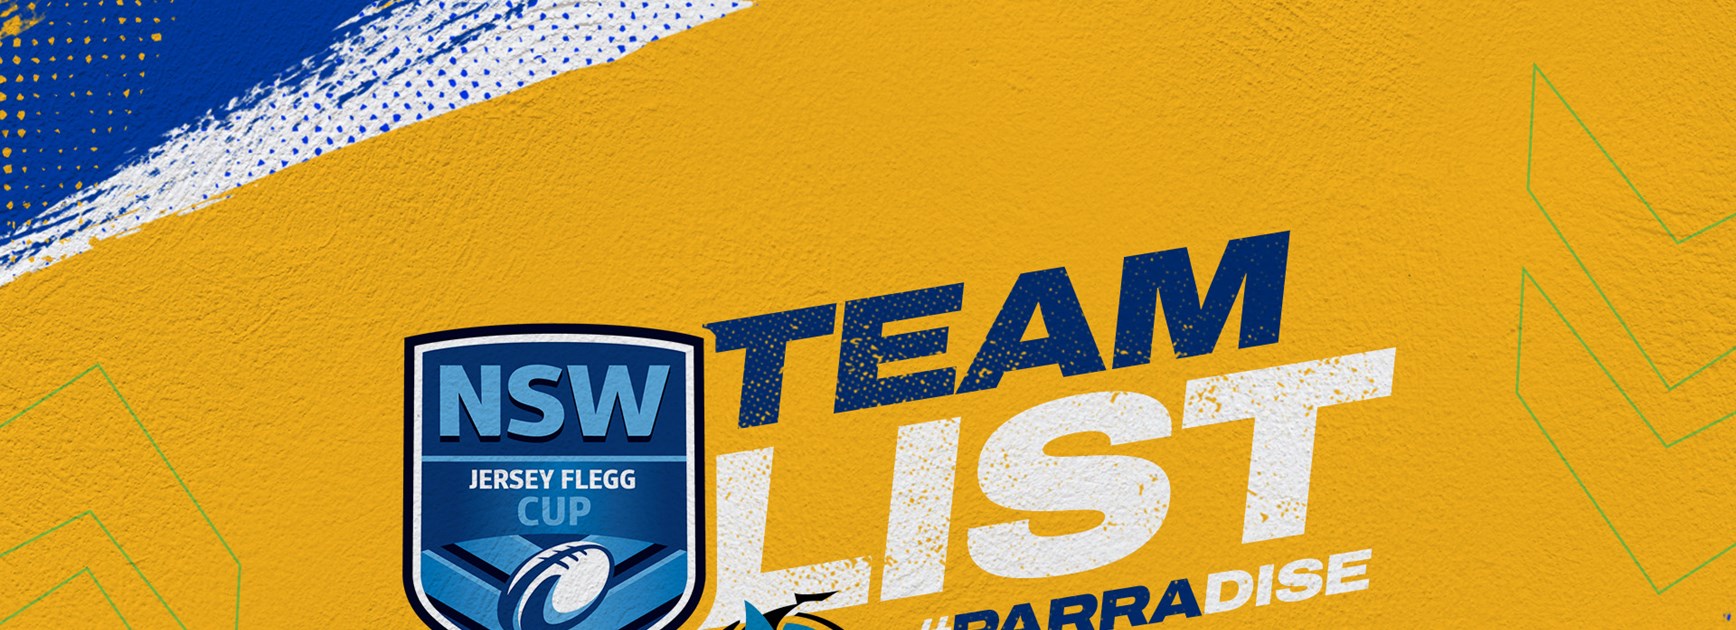 Jersey Flegg Cup Team List - Eels v Sharks, Round 18